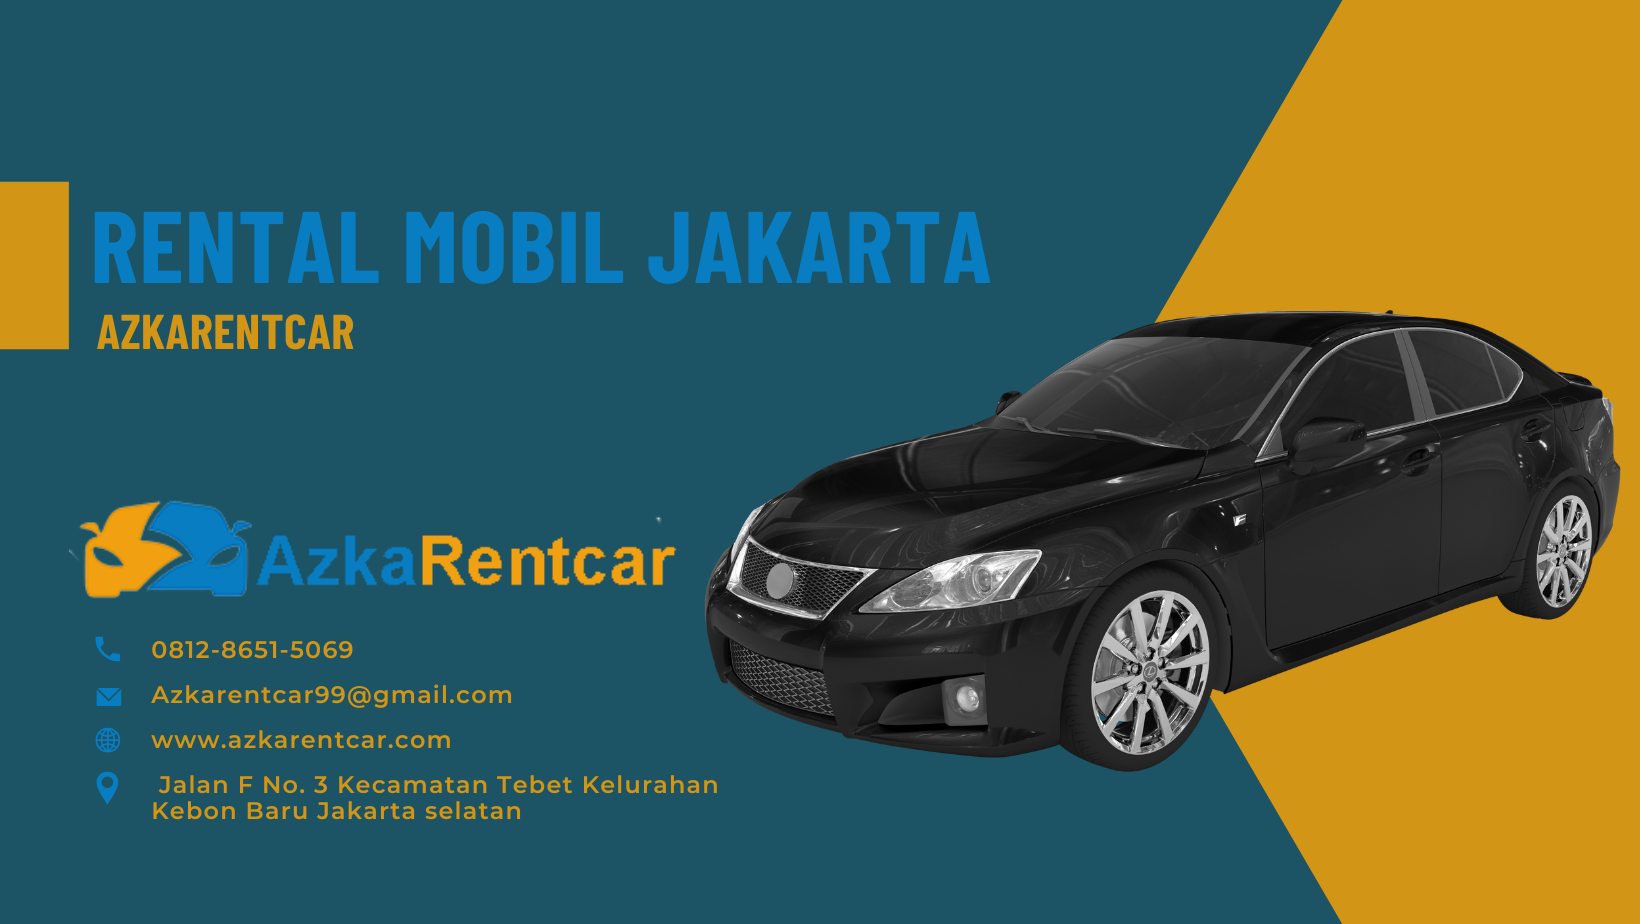 Keunggulan Azka Rent Car dari rental Jakarta lain